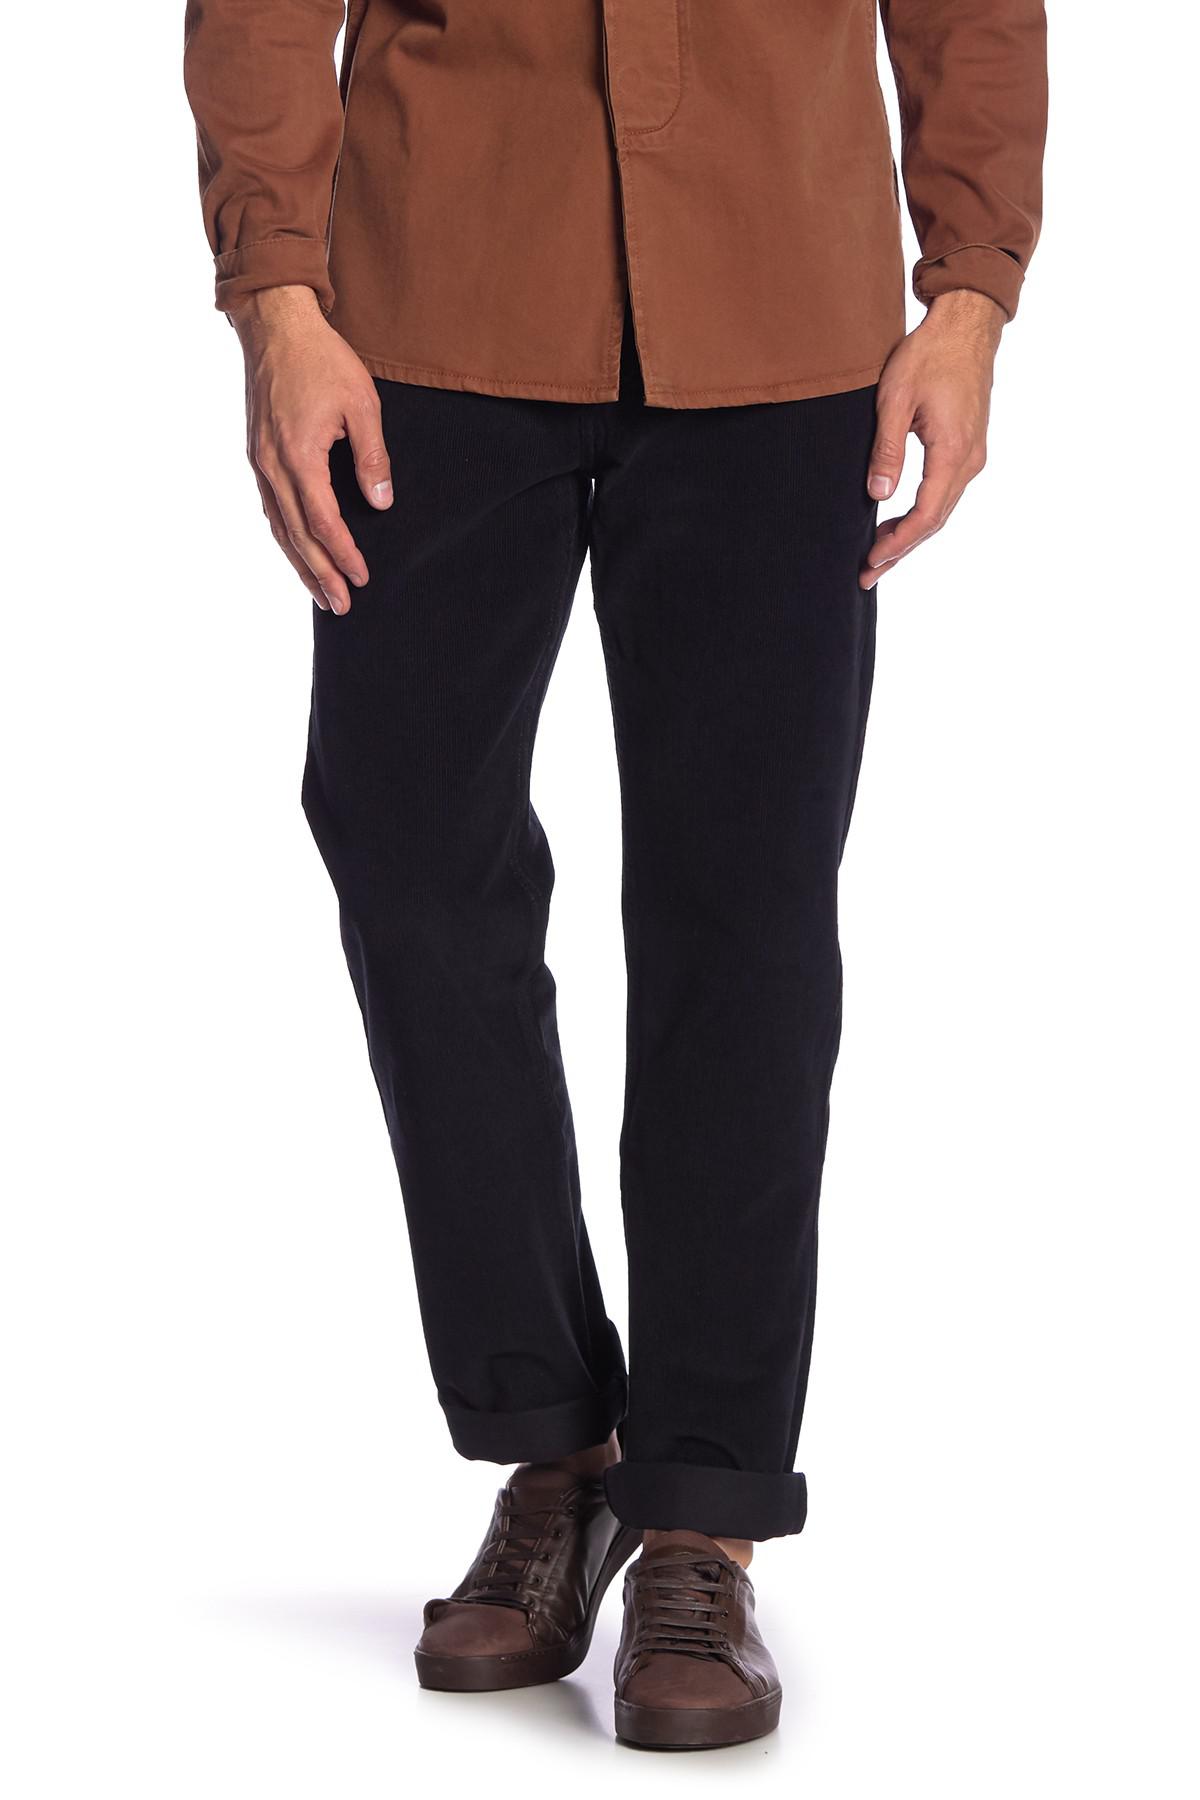 Levi's Wedgie Straight - Chocolate Brown Pants - Corduroy Pants - Lulus